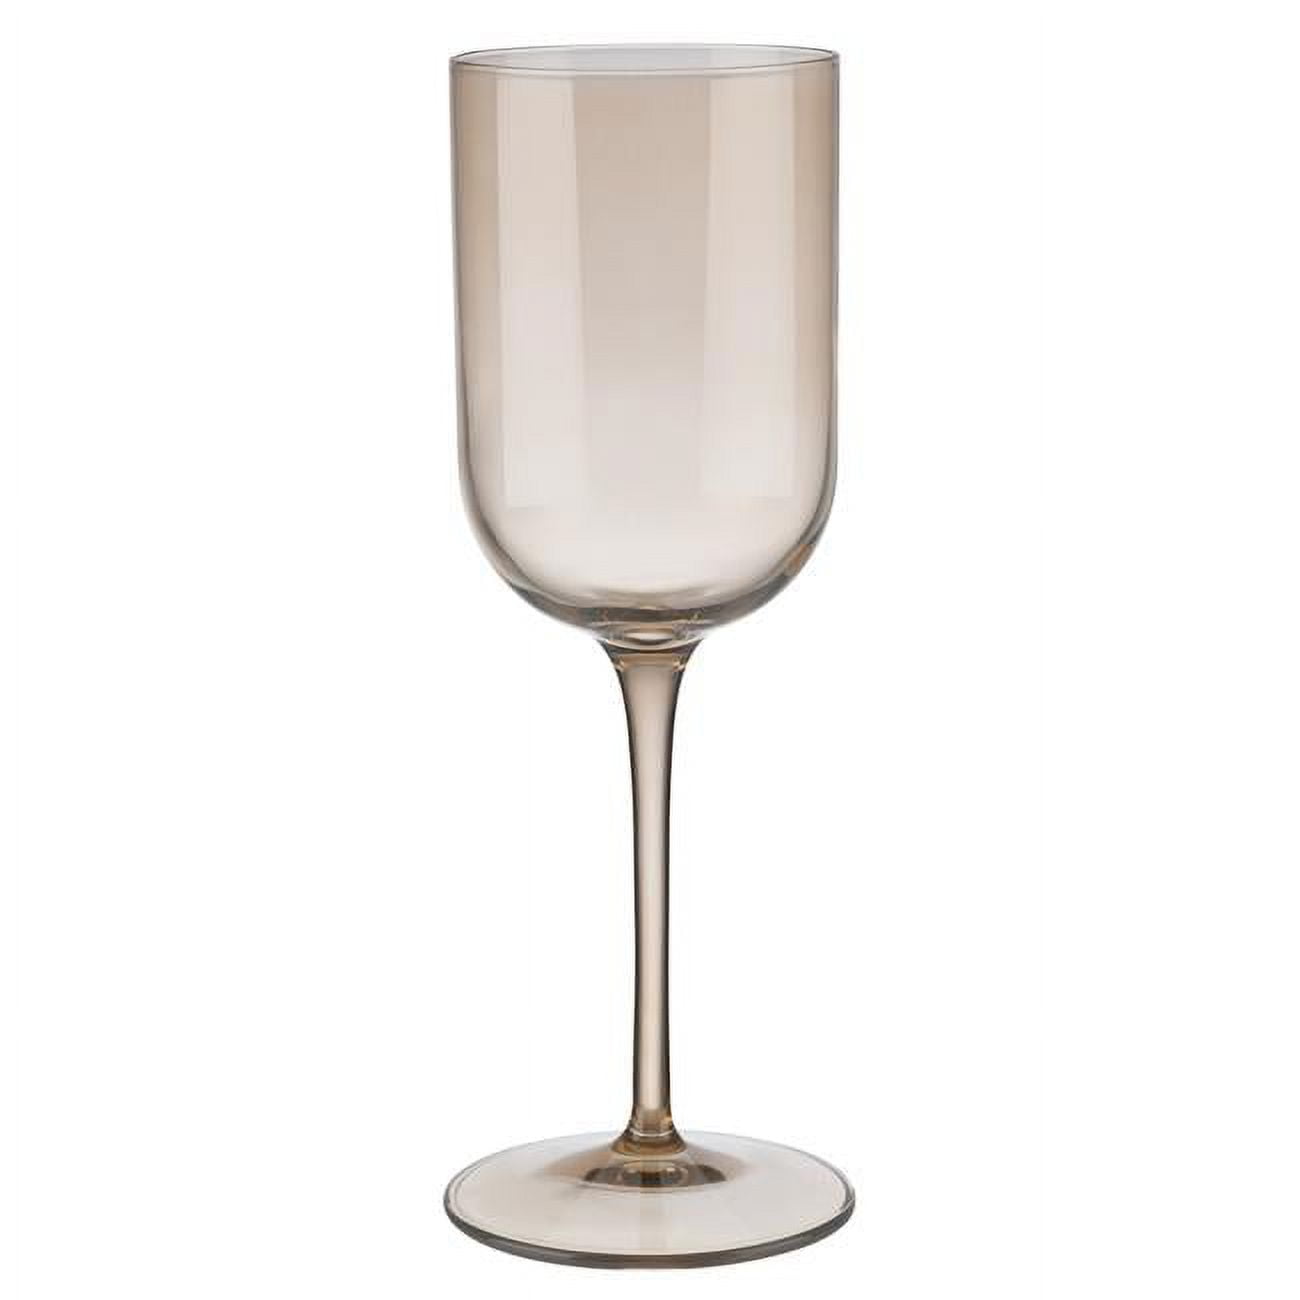 Picture of Blomus 63936 9.5 oz Fuum White Wine Glass, Nomad - Set of 4